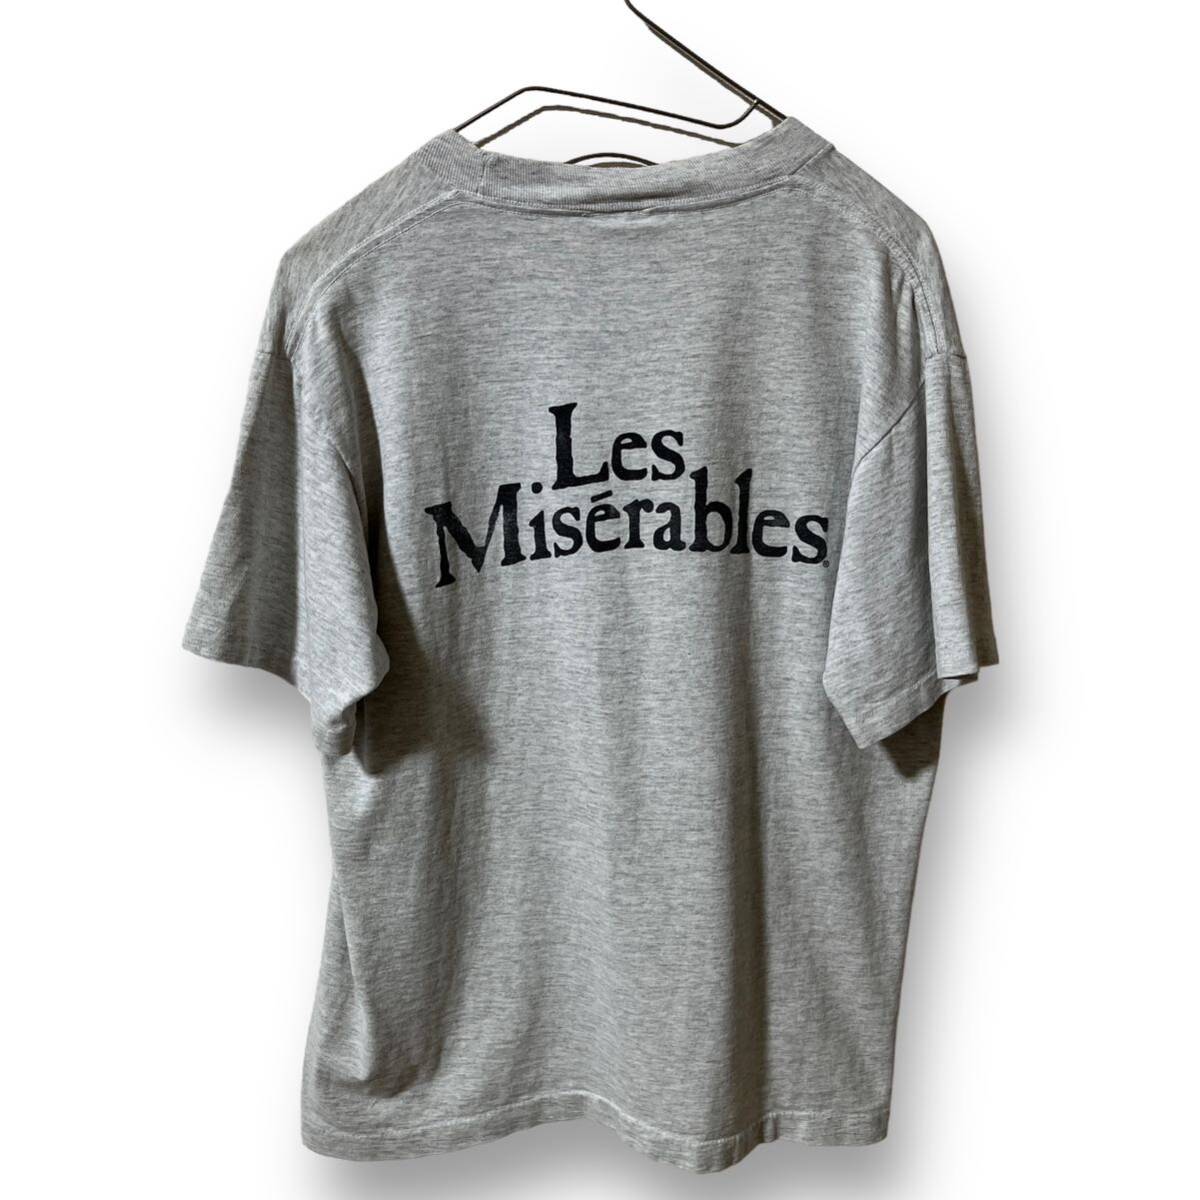 【r1】 anvil 80s USA製 Les Miserables プリント Tシャツ メンズ M グレー レ ミゼラブル ミュージカル ムービー アメリカ製 輸入古着